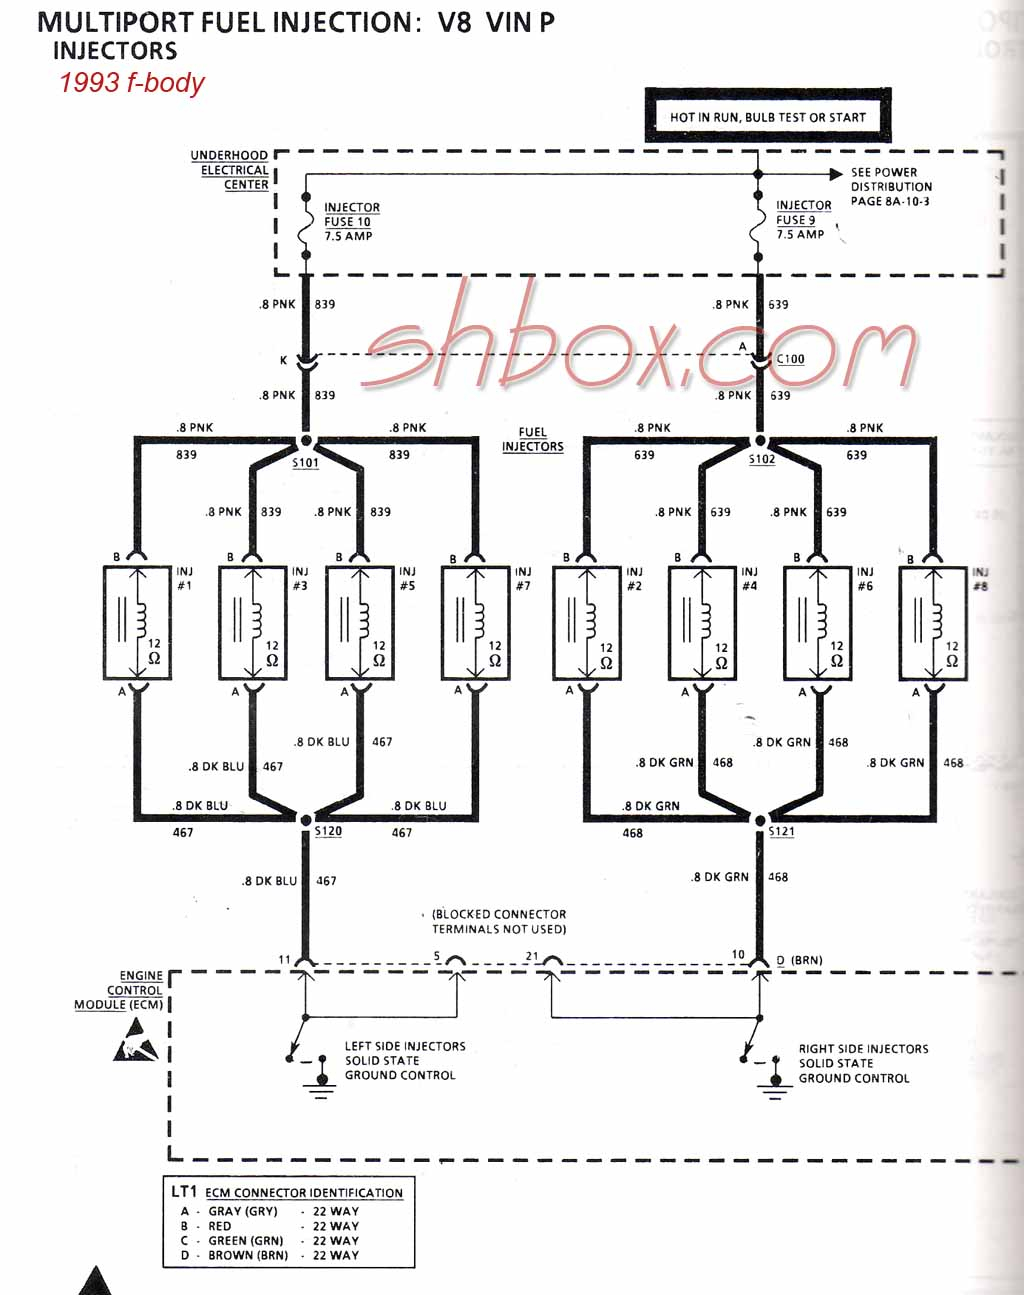 Fuel Injector Wiring Diagram Wrg 7159 Toyota Fuel Injector Wiring Diagram